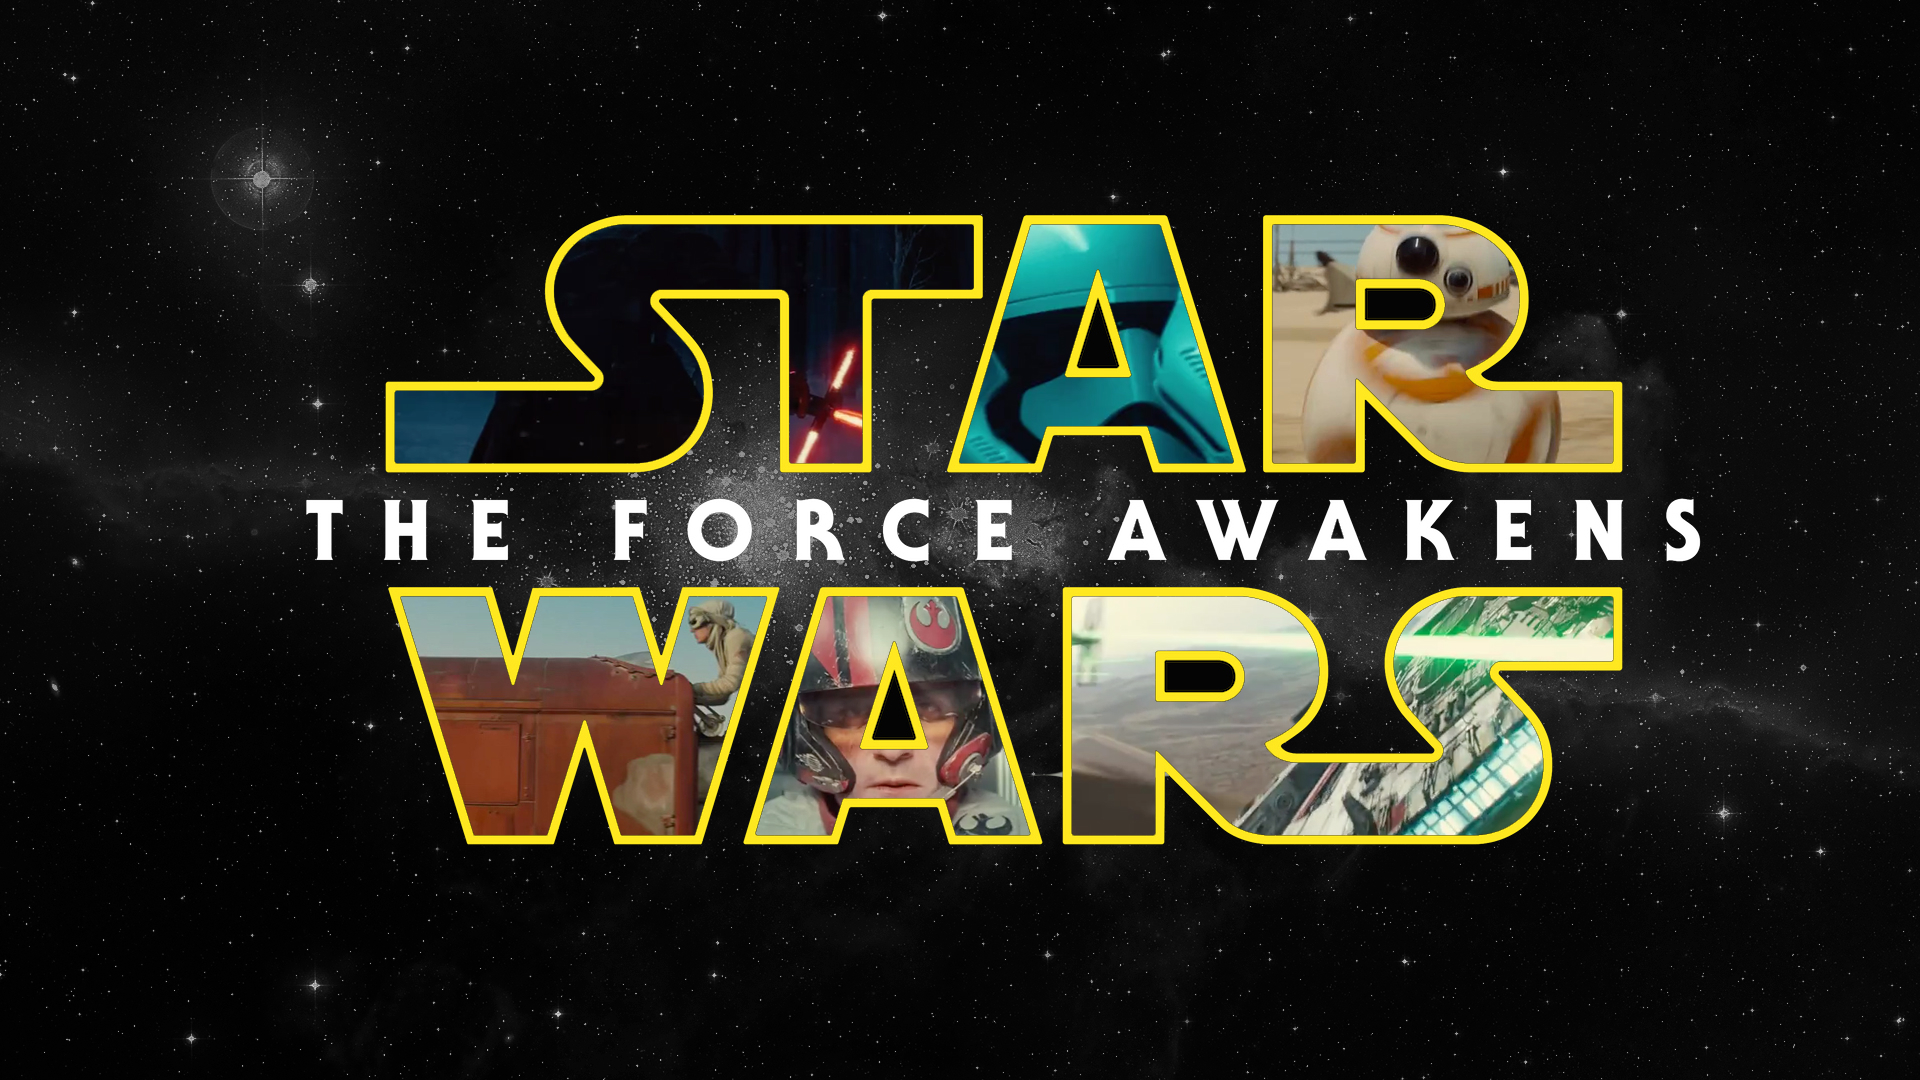 vertical wallpaper movie, star wars episode vii: the force awakens, star wars